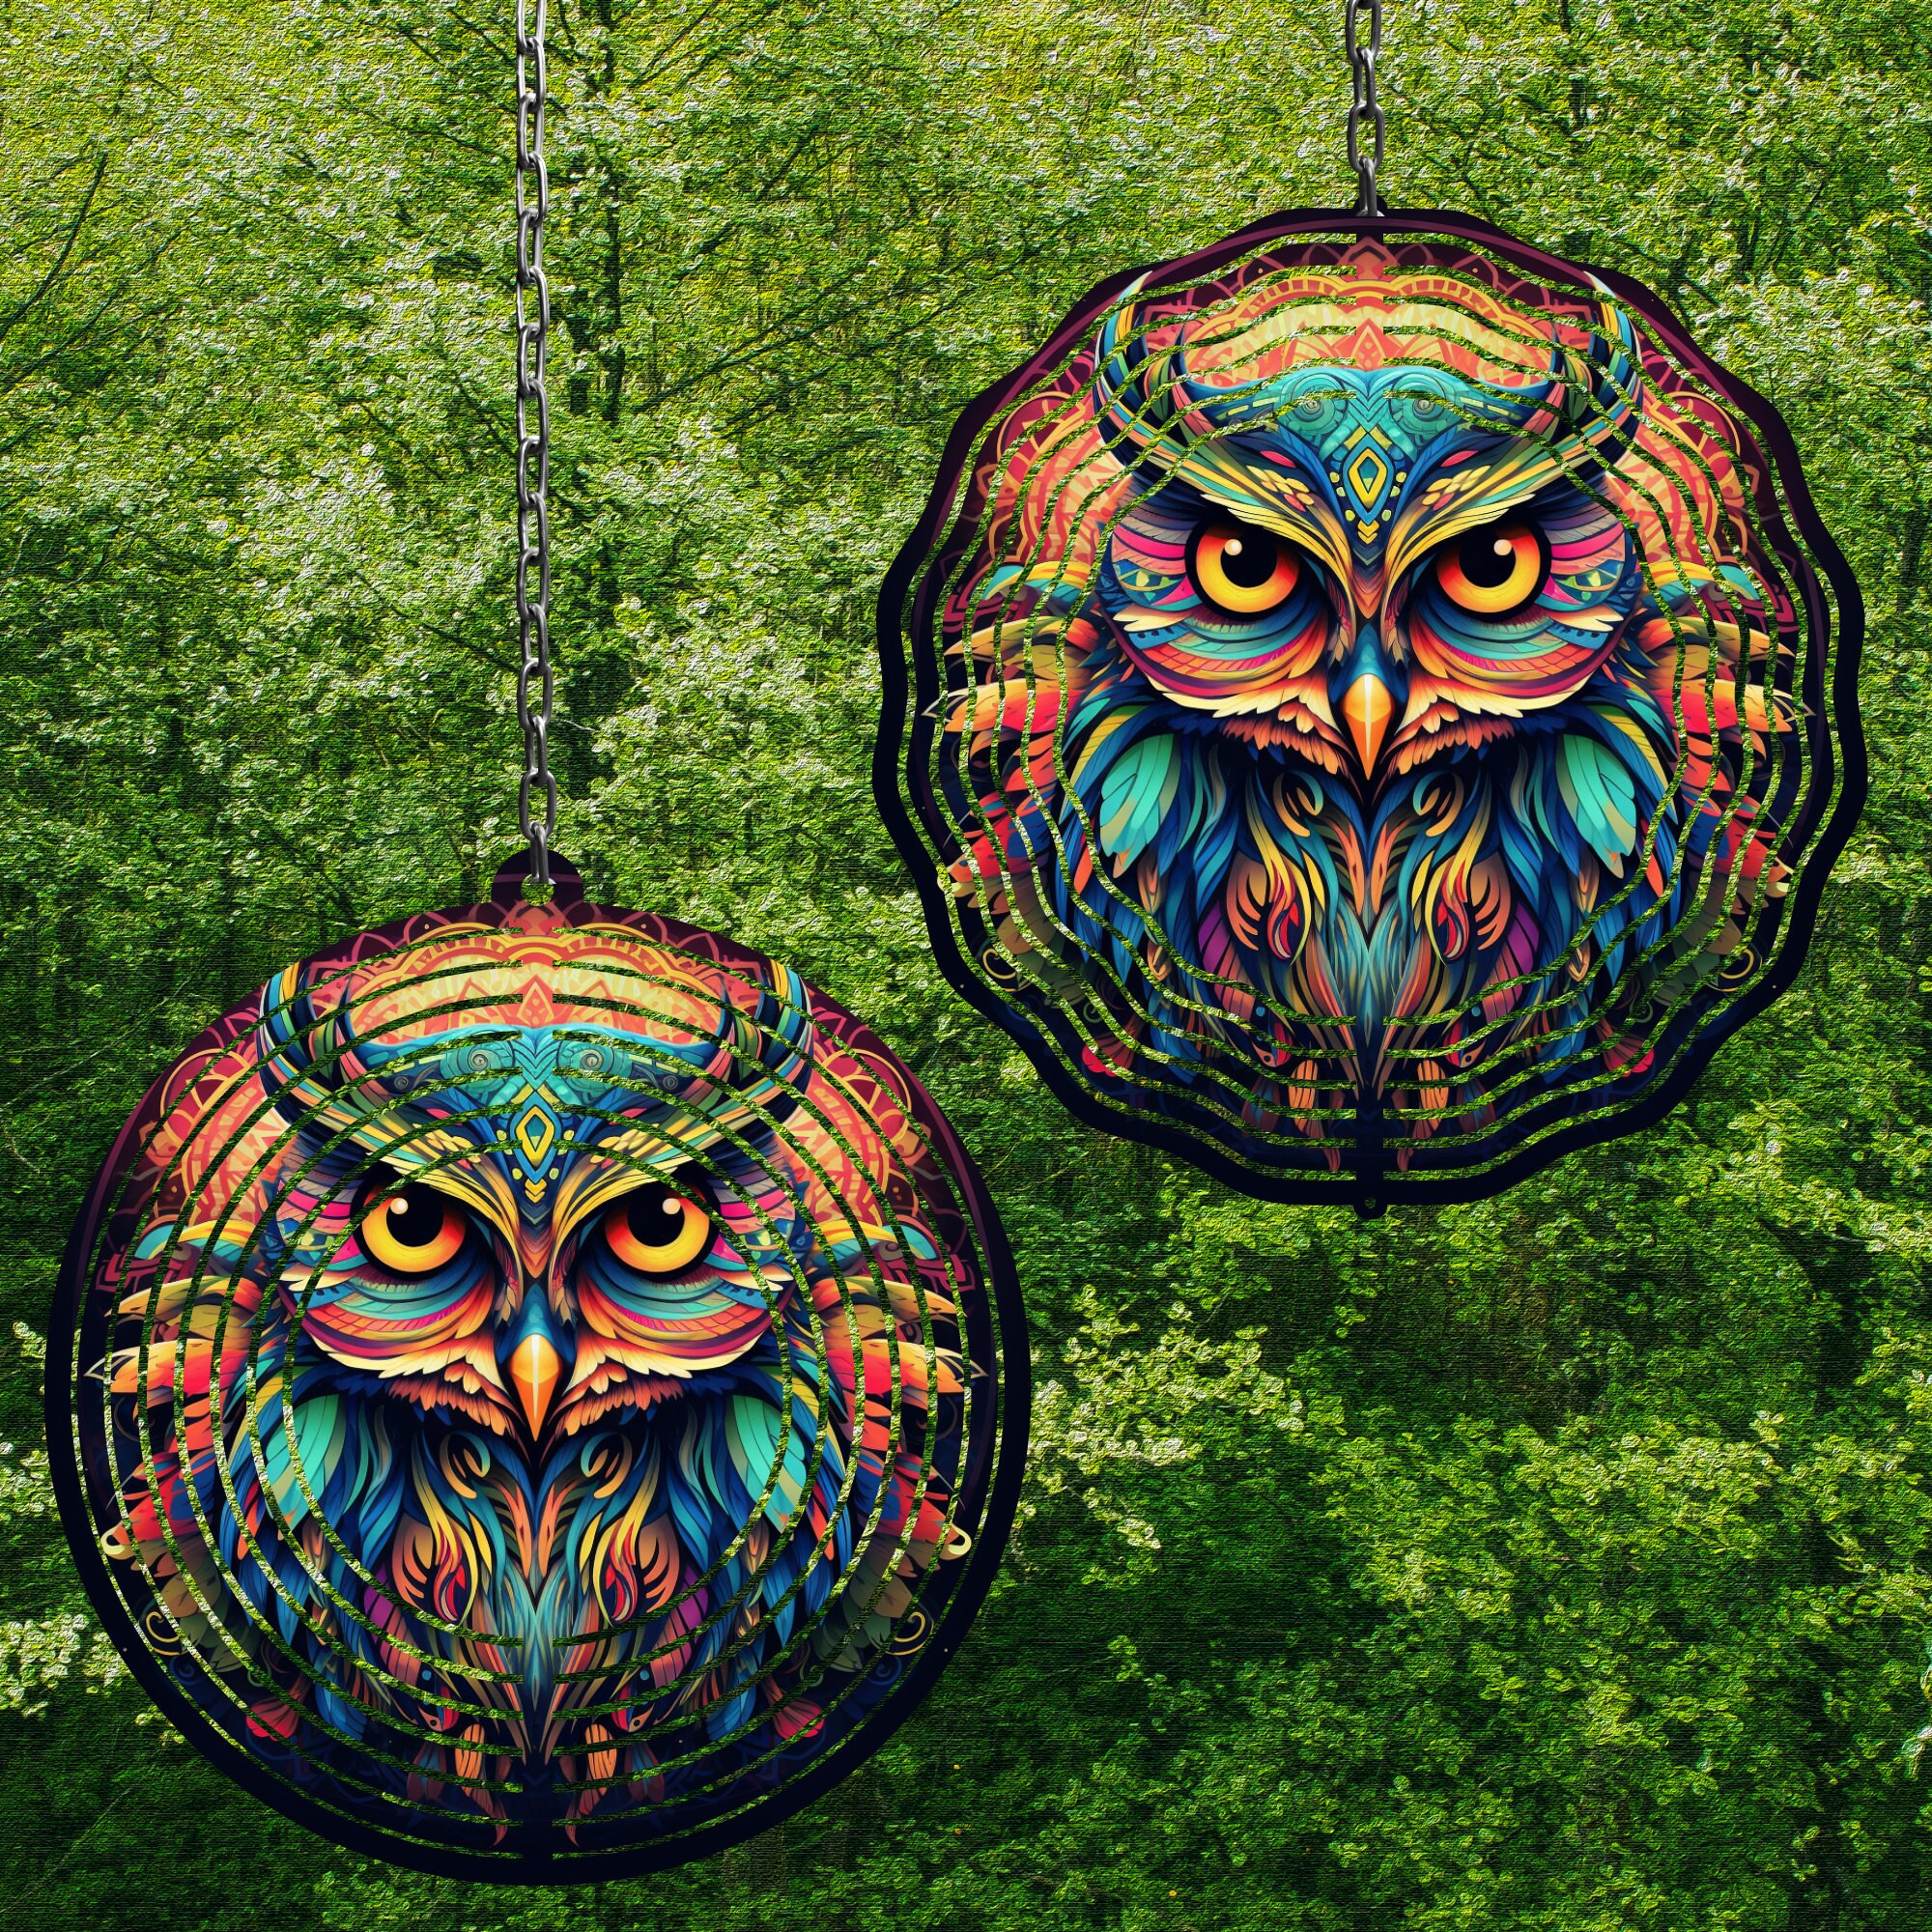 Rainbow Owl Wind Spinner For Yard And Garden, Outdoor Garden Yard Decoration, Garden Decor, Chime Art Gift